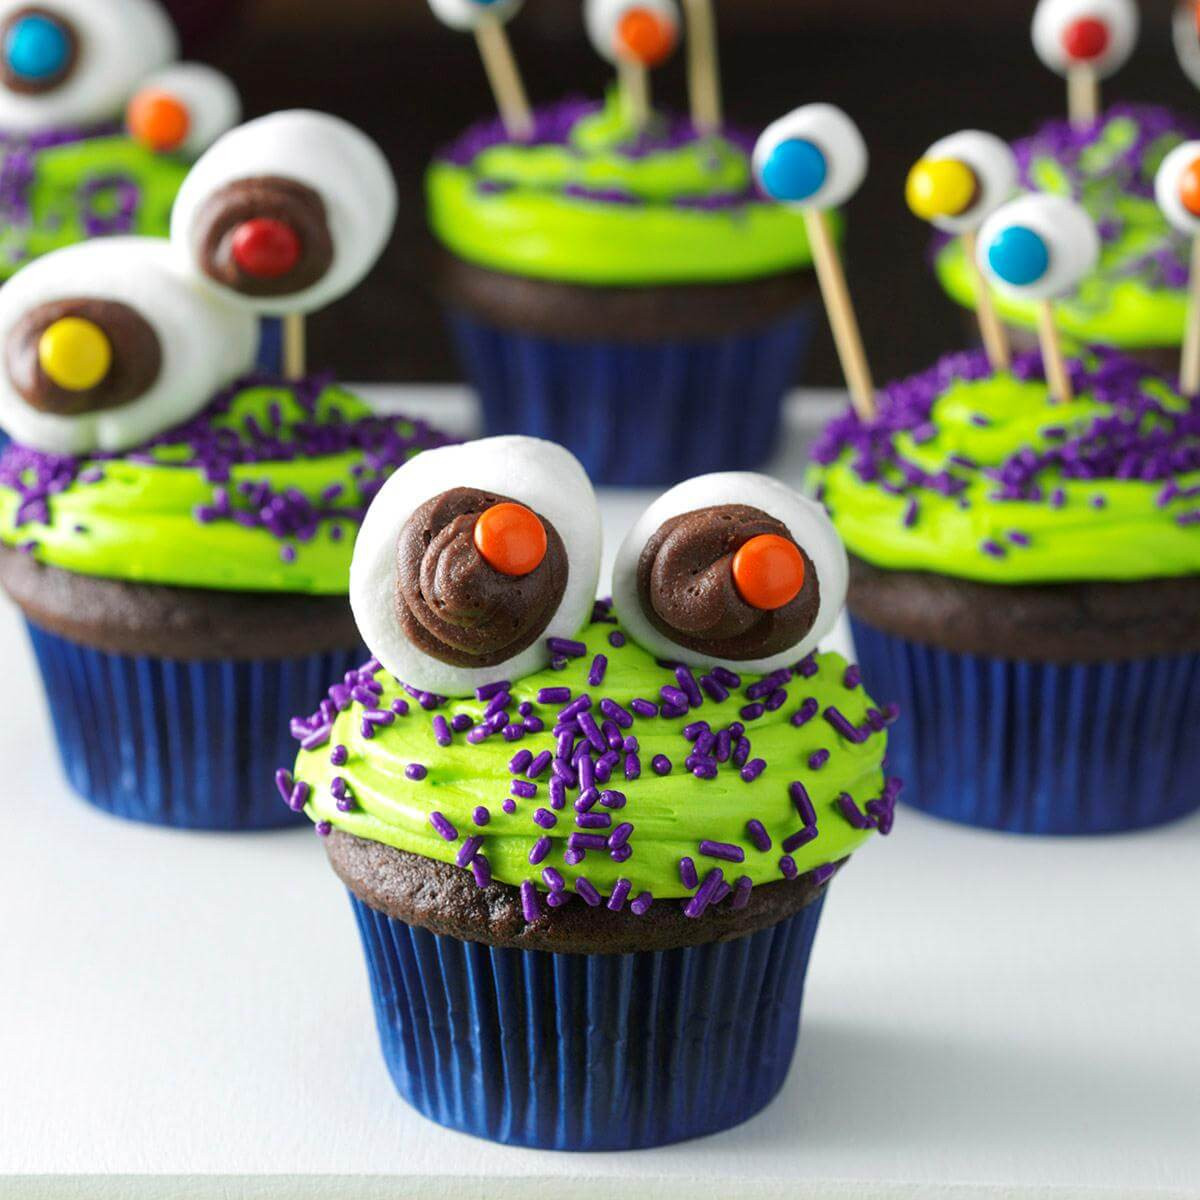 Cupcake Decorating Ideas For Kids
 21 Super Fun Cupcake Ideas for Kids